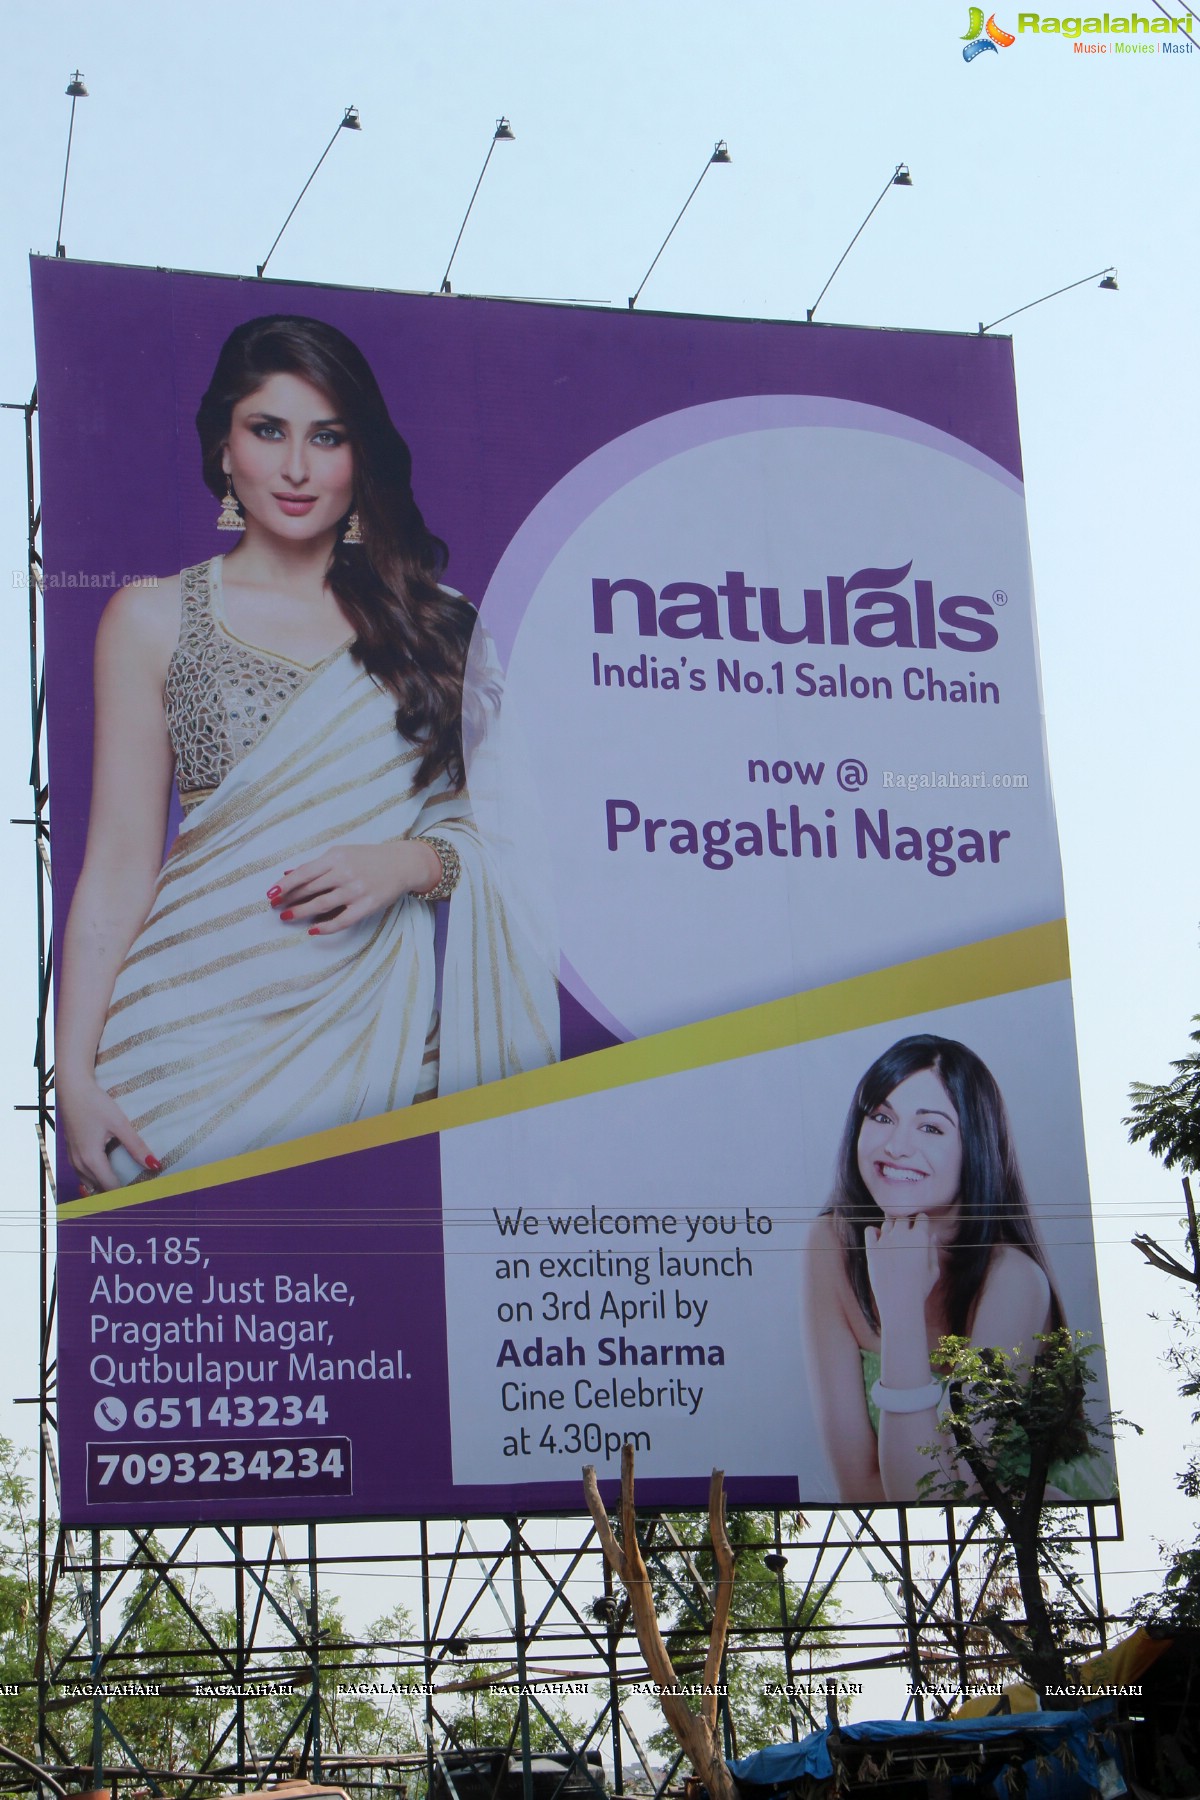 Naturals Salon Launch by Adah Sharma at Pragathi Nagar, Hyderabad